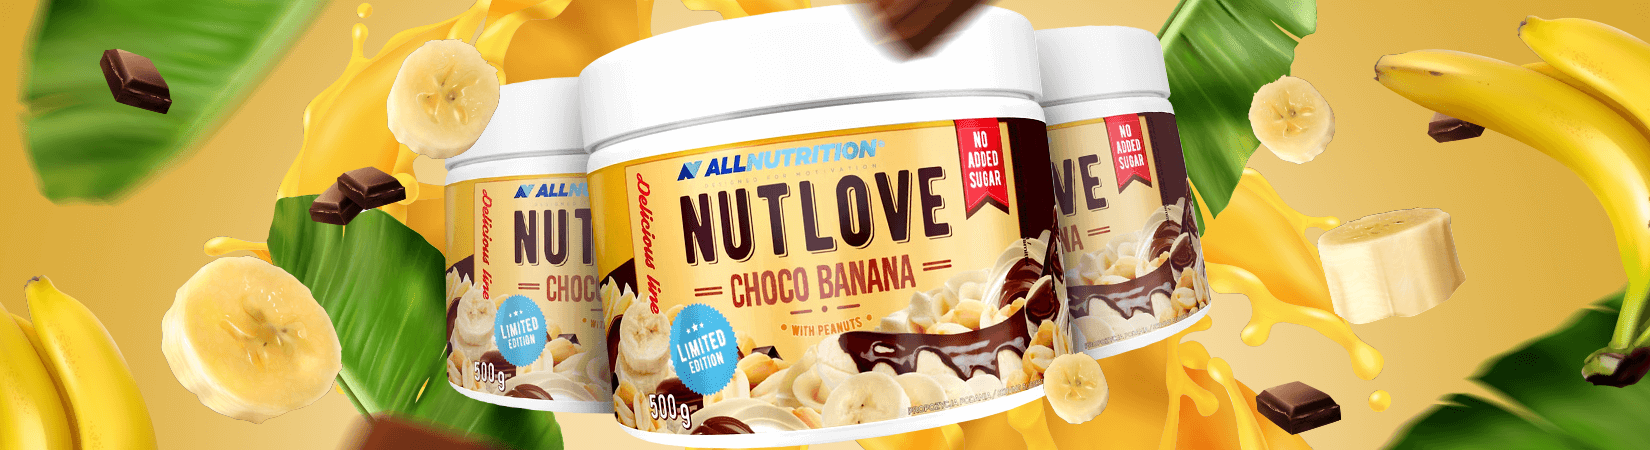 Allnutrition Nutlove Choco Banana Limited Edition